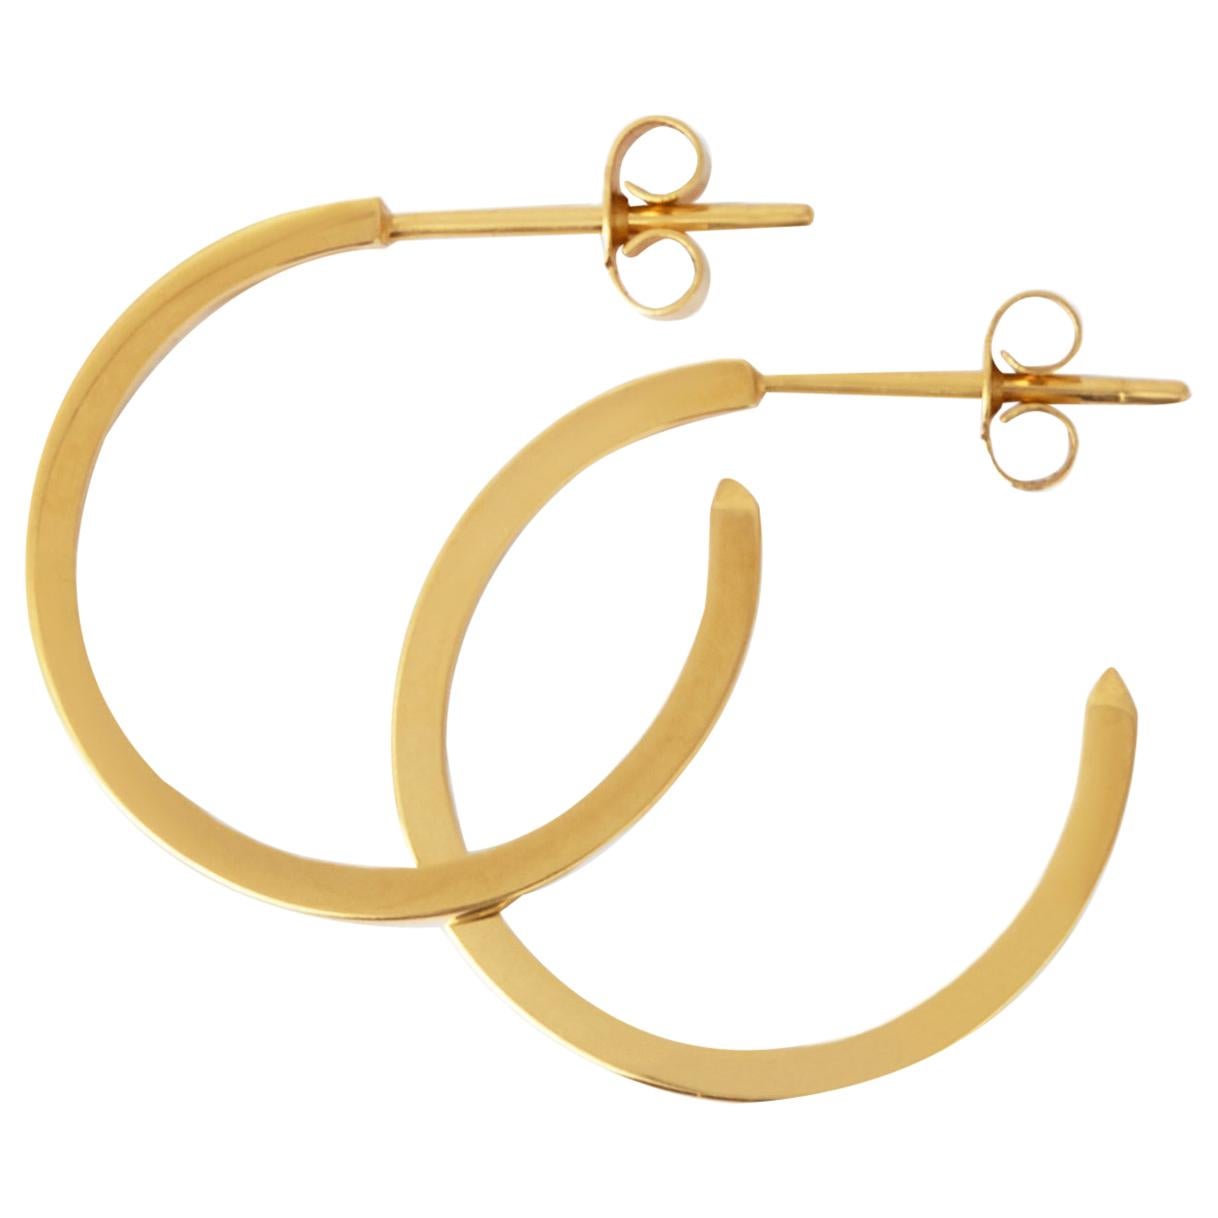 18 Karat Gold Hoop Earrings with White Diamonds by Allison Bryan